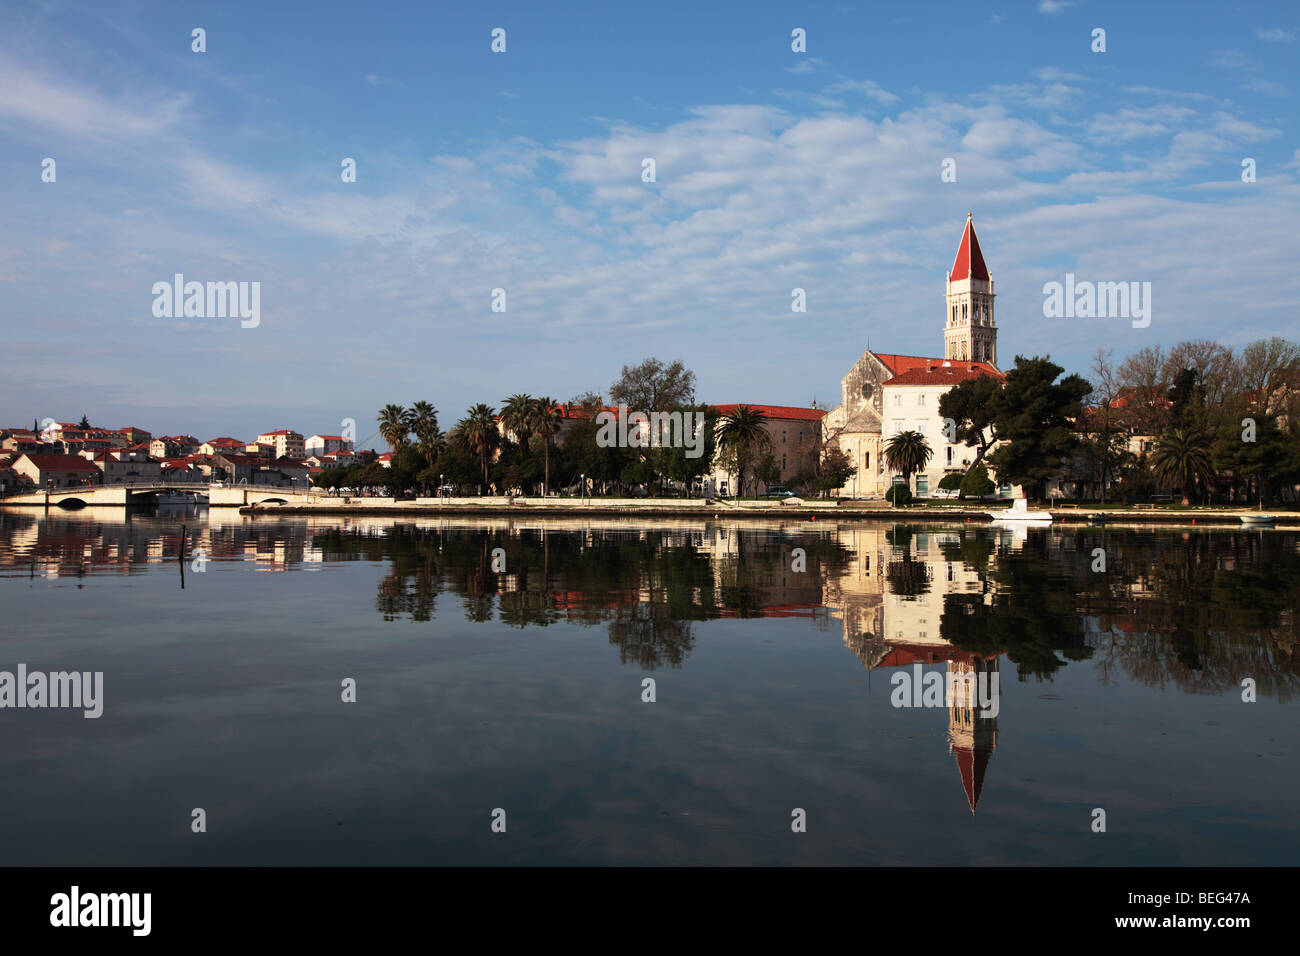 Historic town of Trogir, Croatia Stock Photo